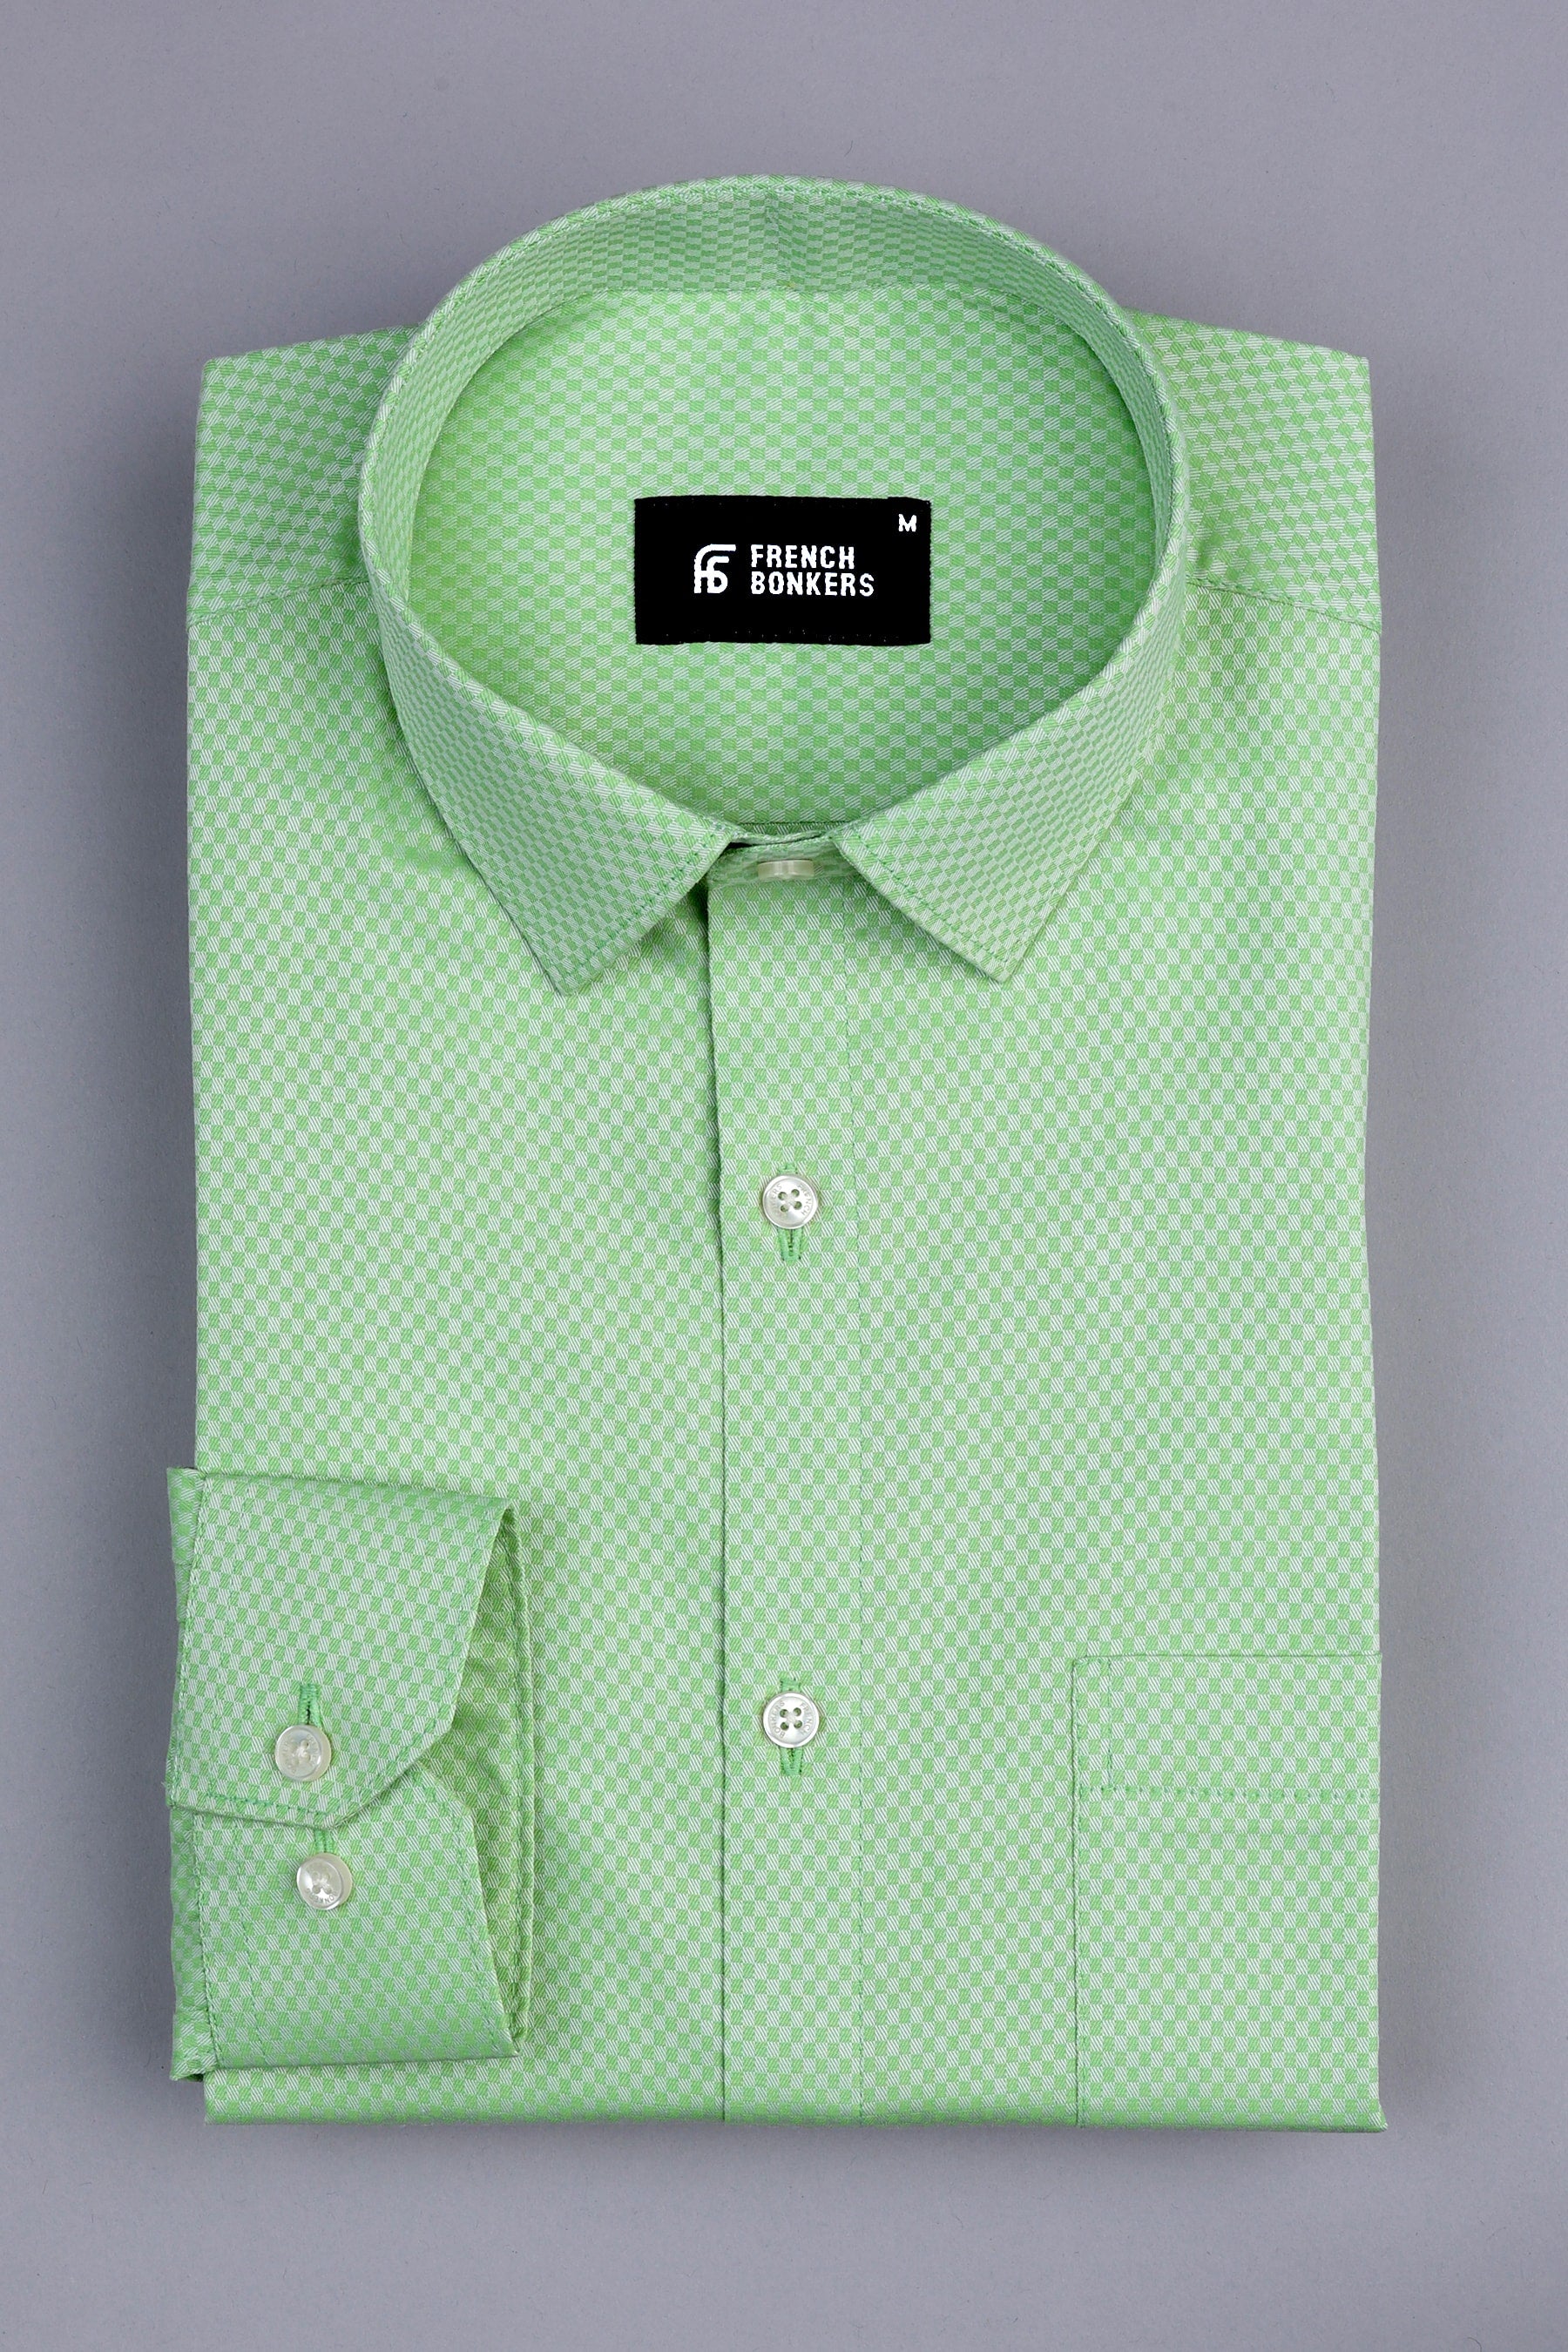 Parrot green  jacquard printed shirt